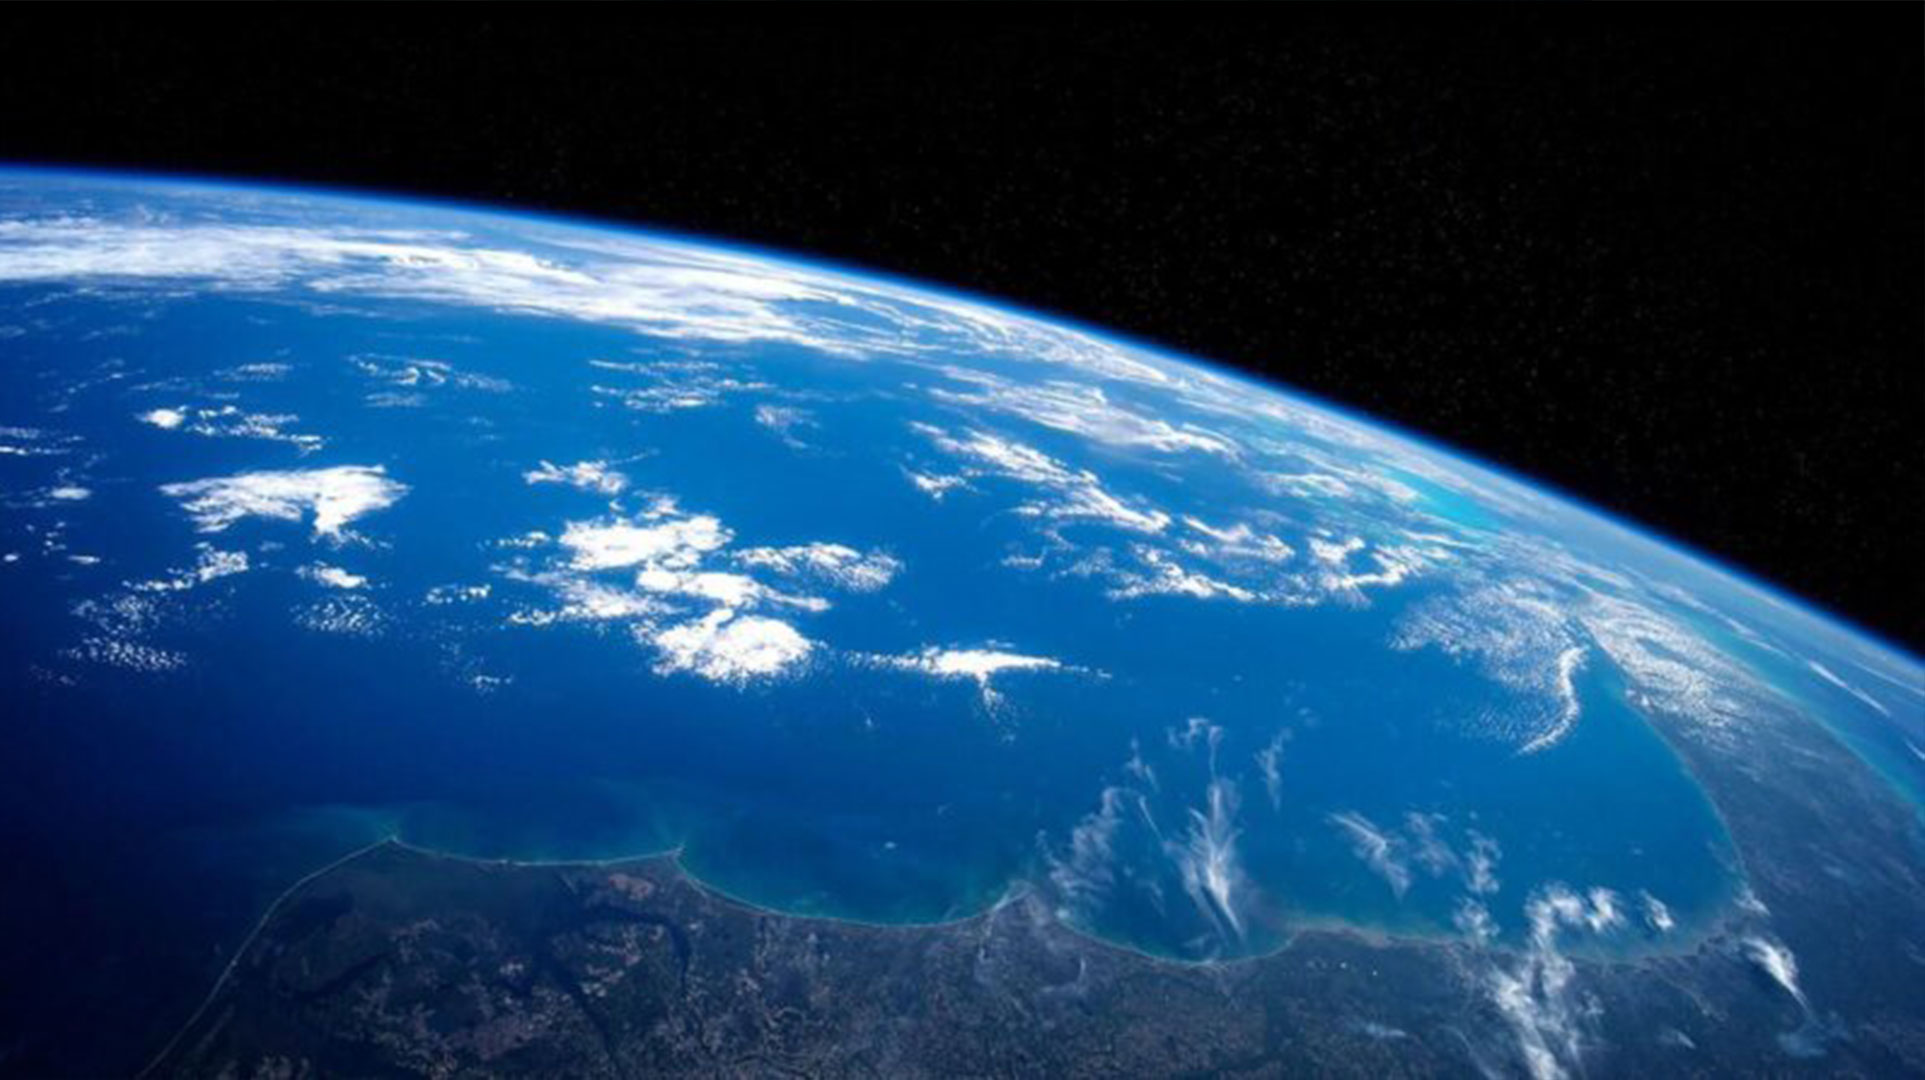 vue satellite de la terre